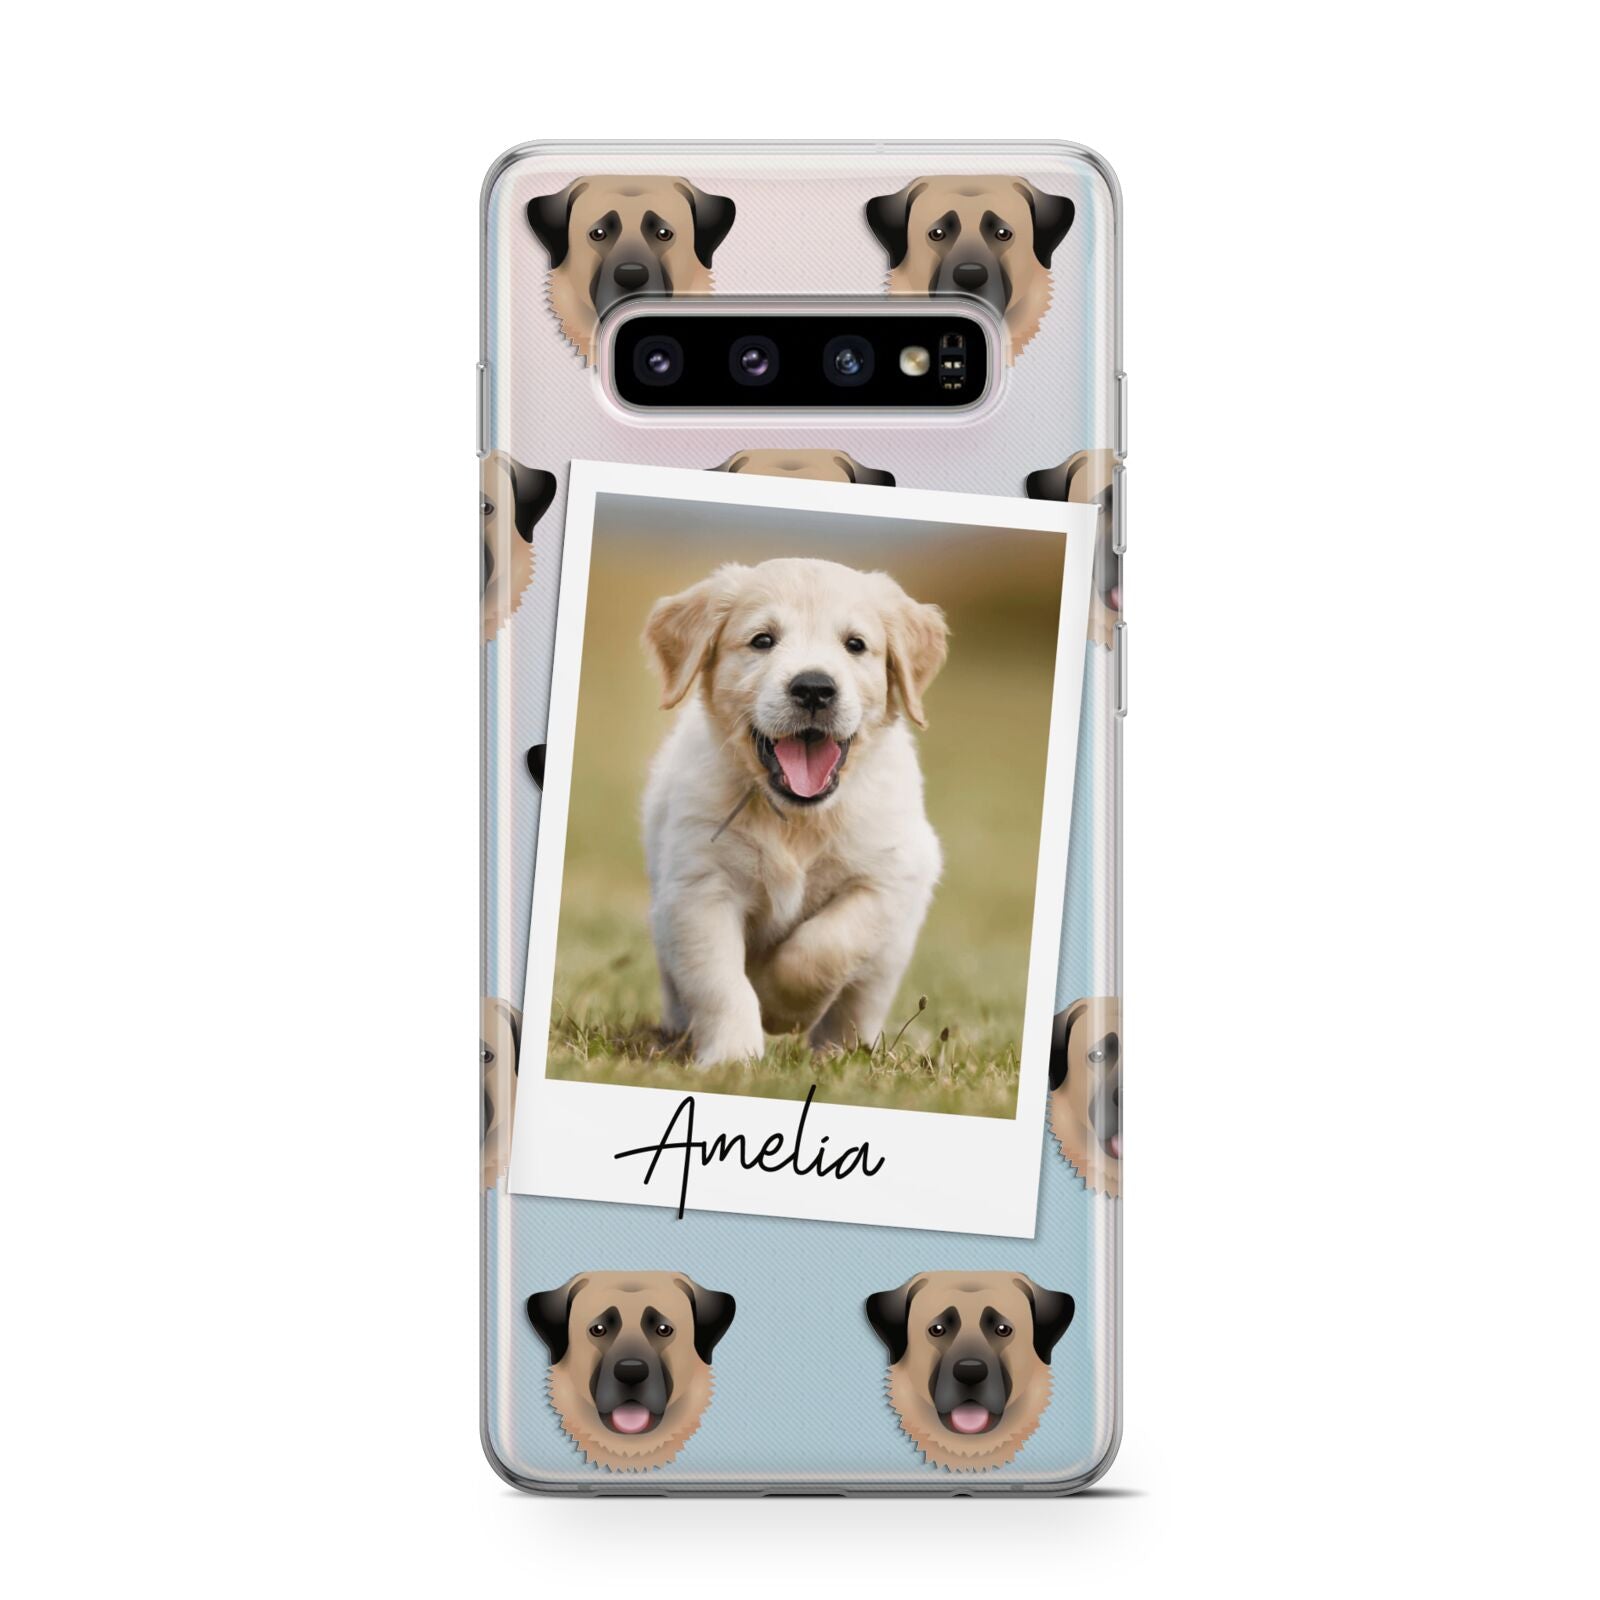 Personalised Dog Photo Samsung Galaxy S10 Case